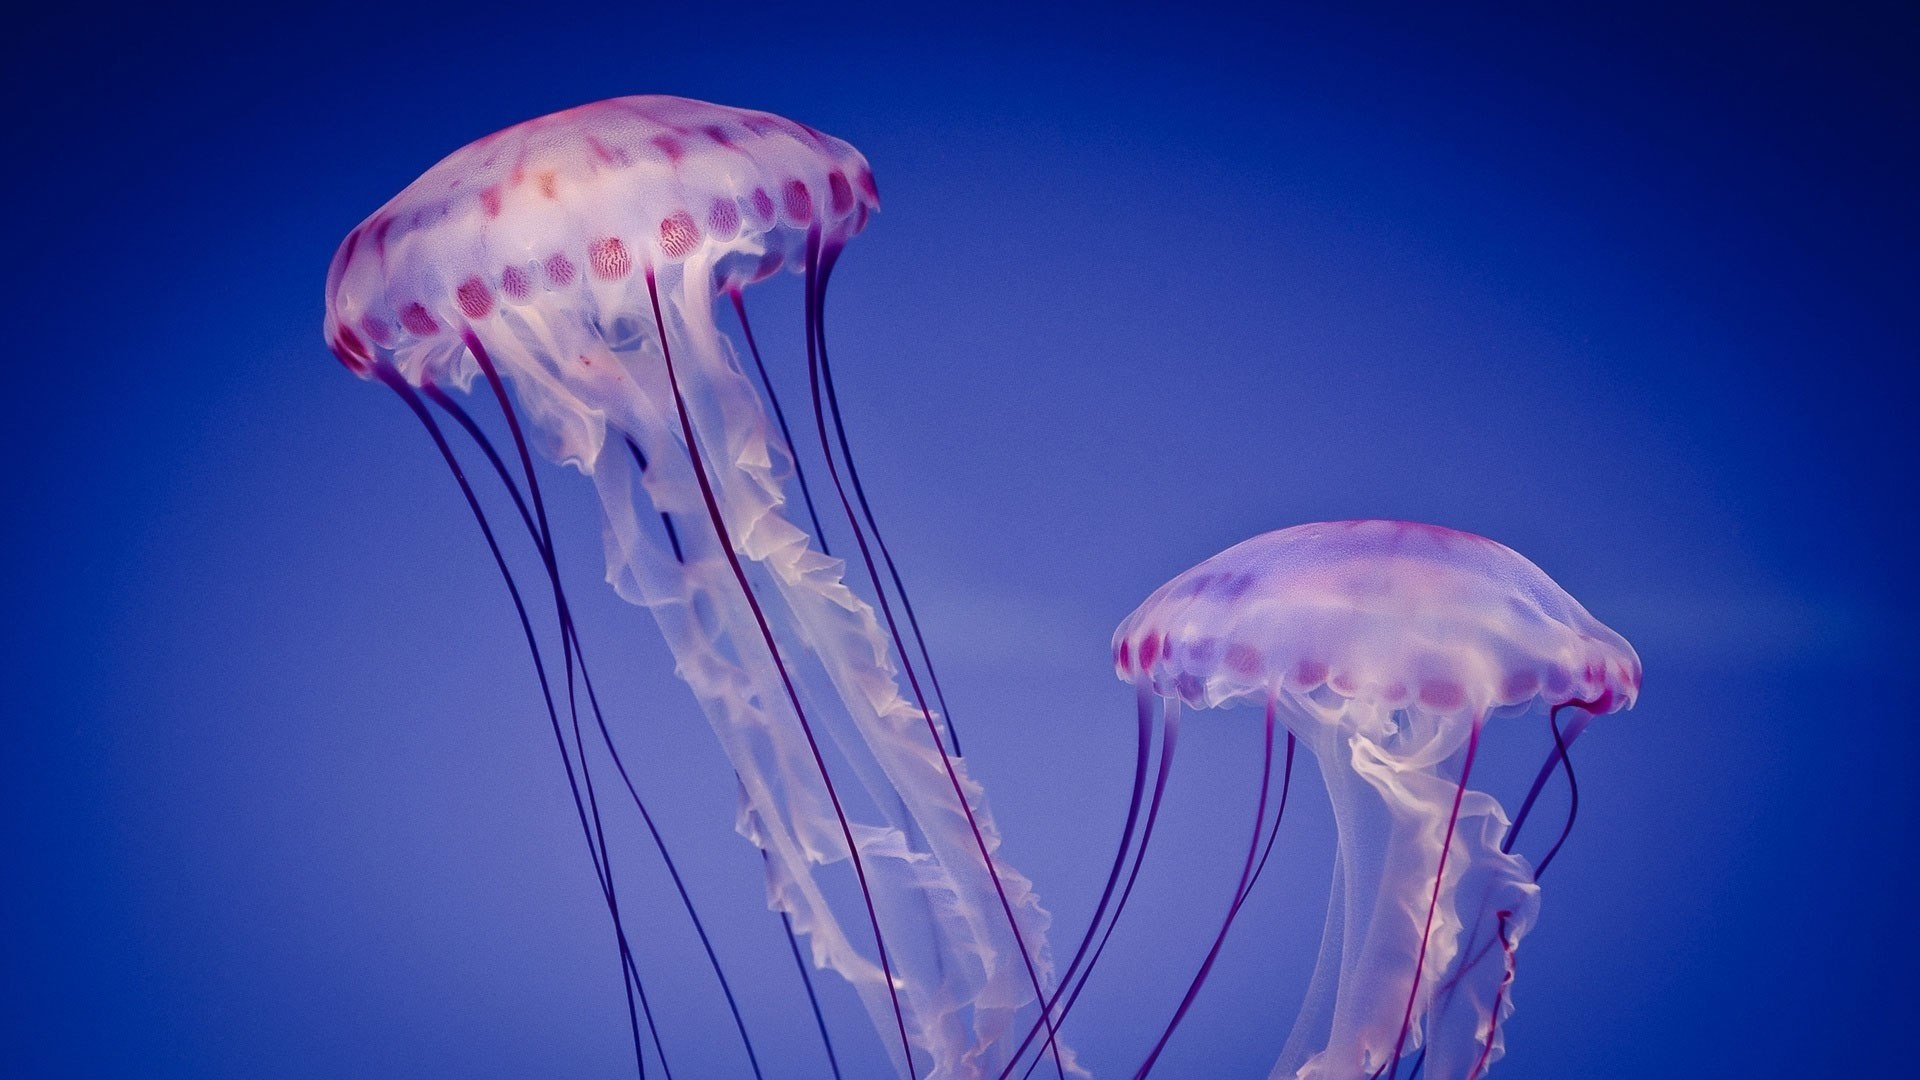 Jellyfish hd wallpaper download